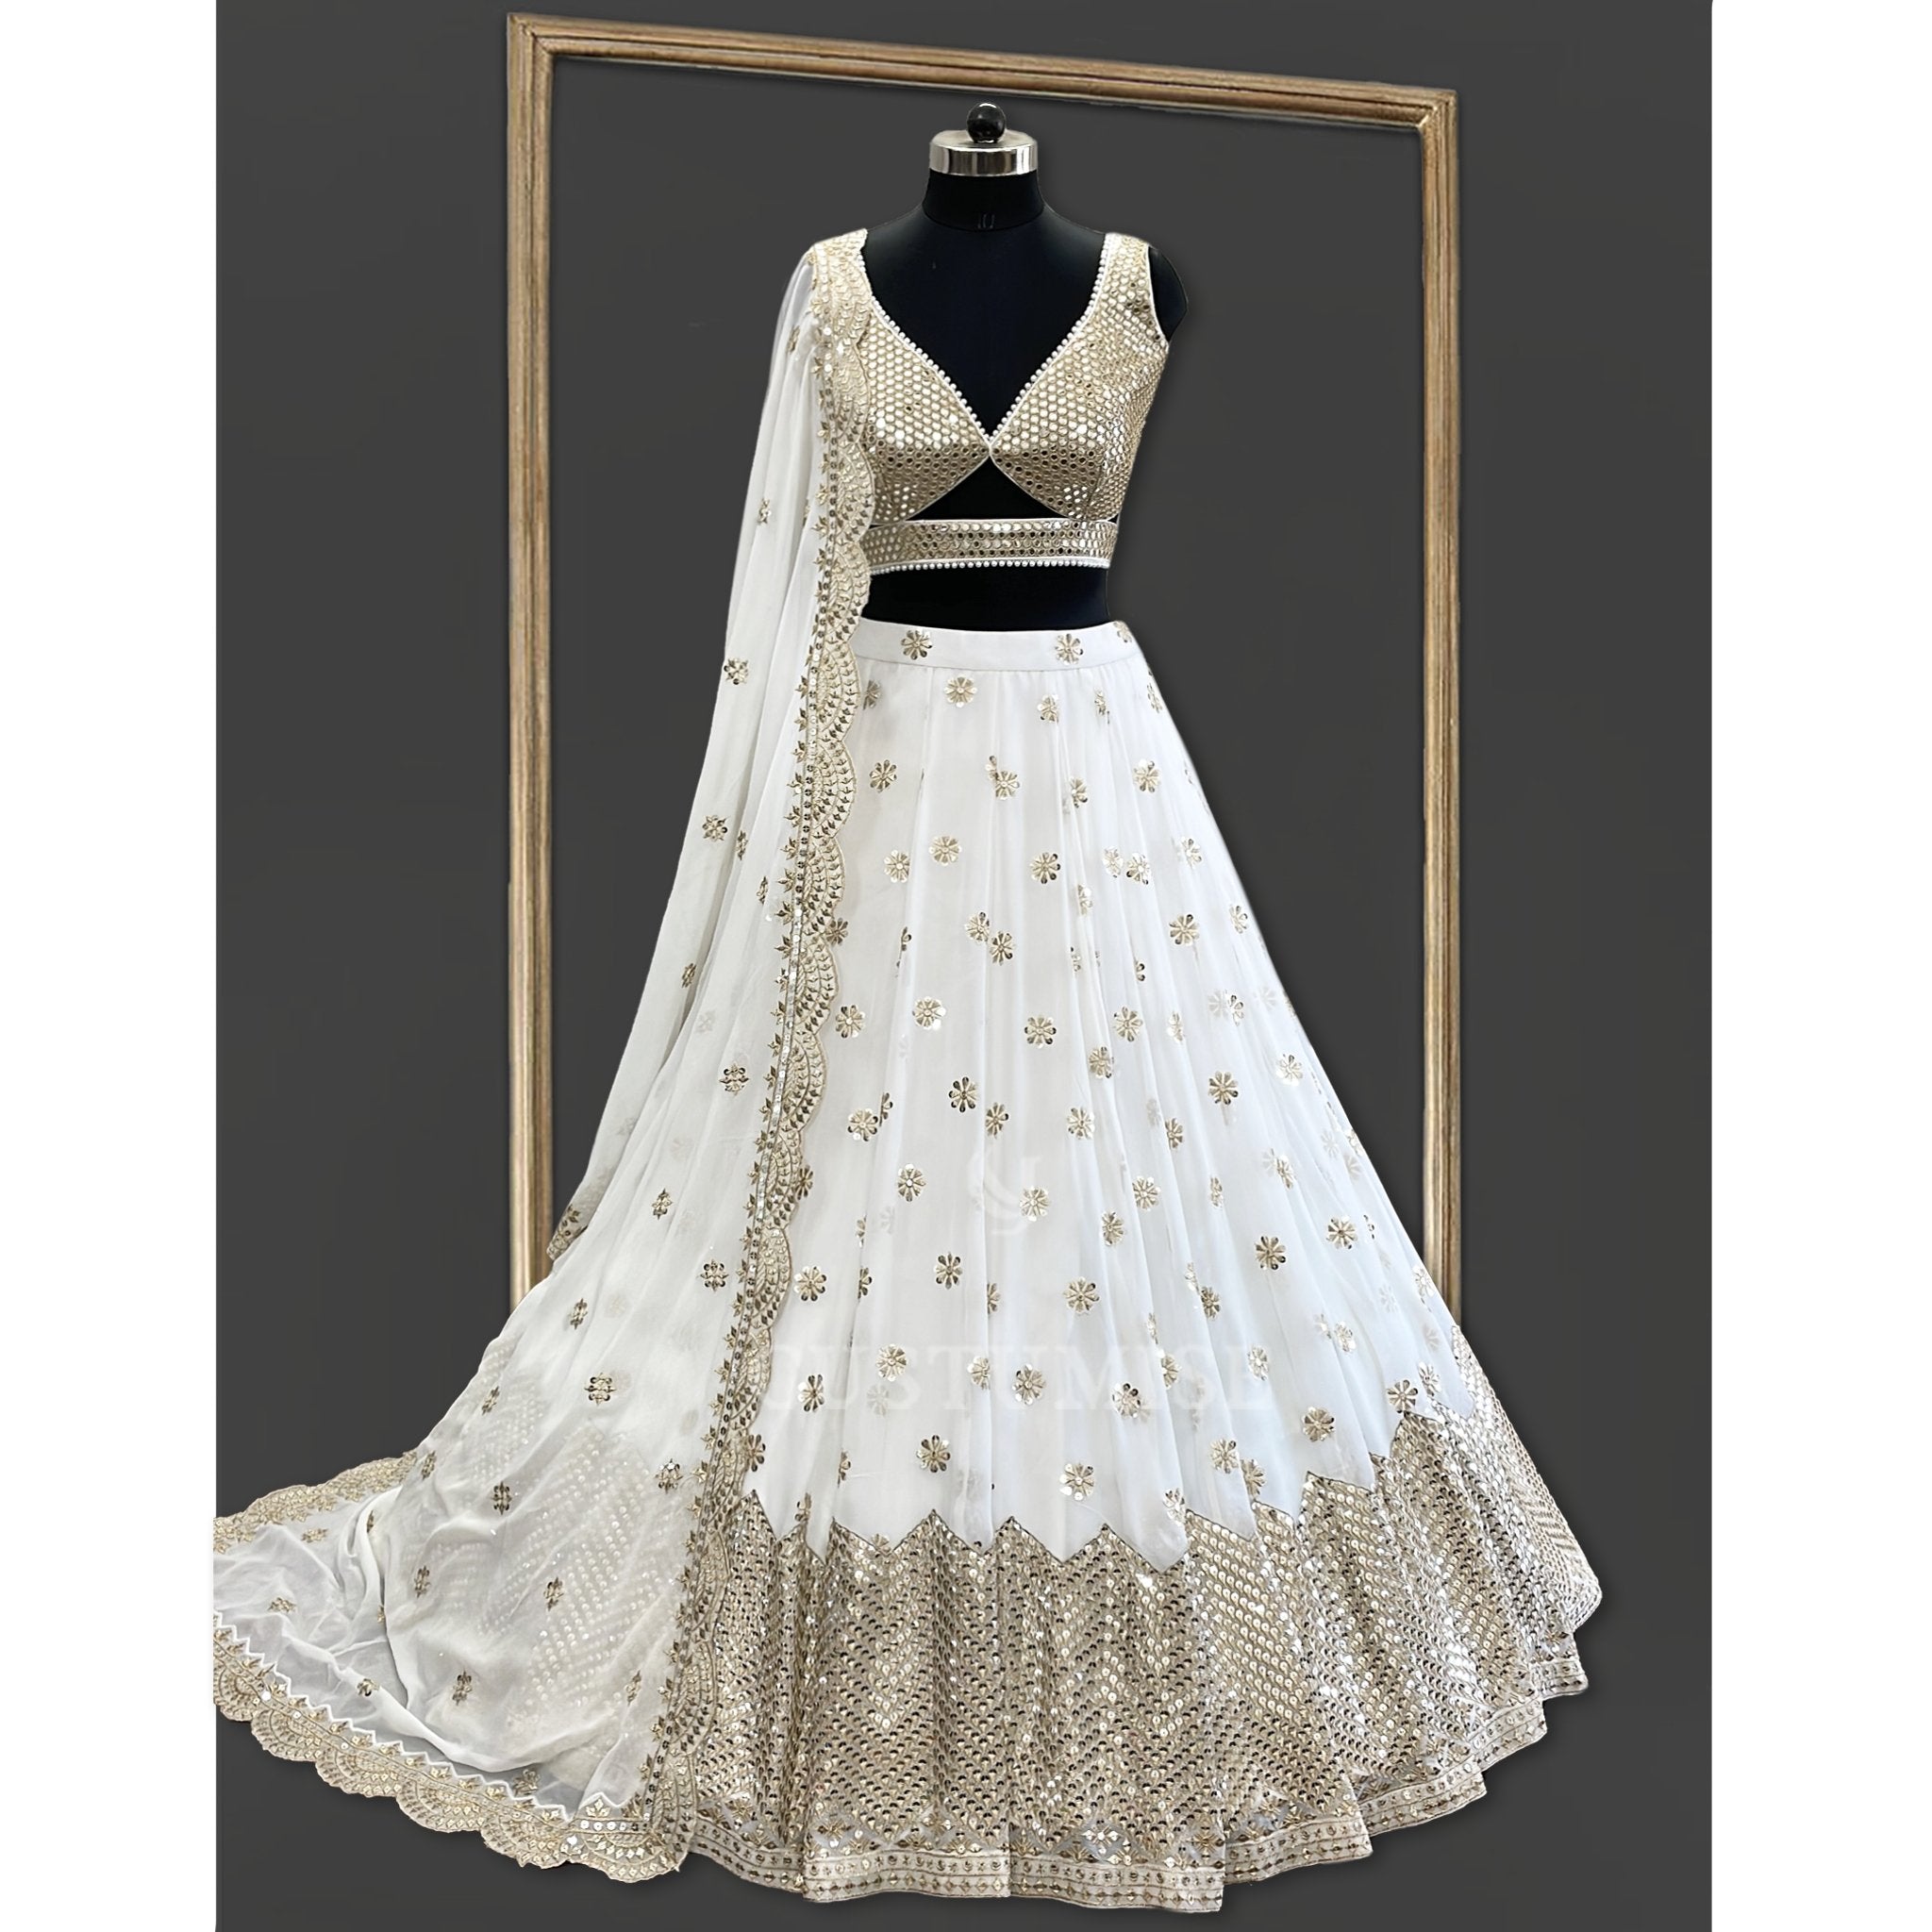 Stunning White and Gold Lehenga - Indian Designer Bridal Wedding Outfit